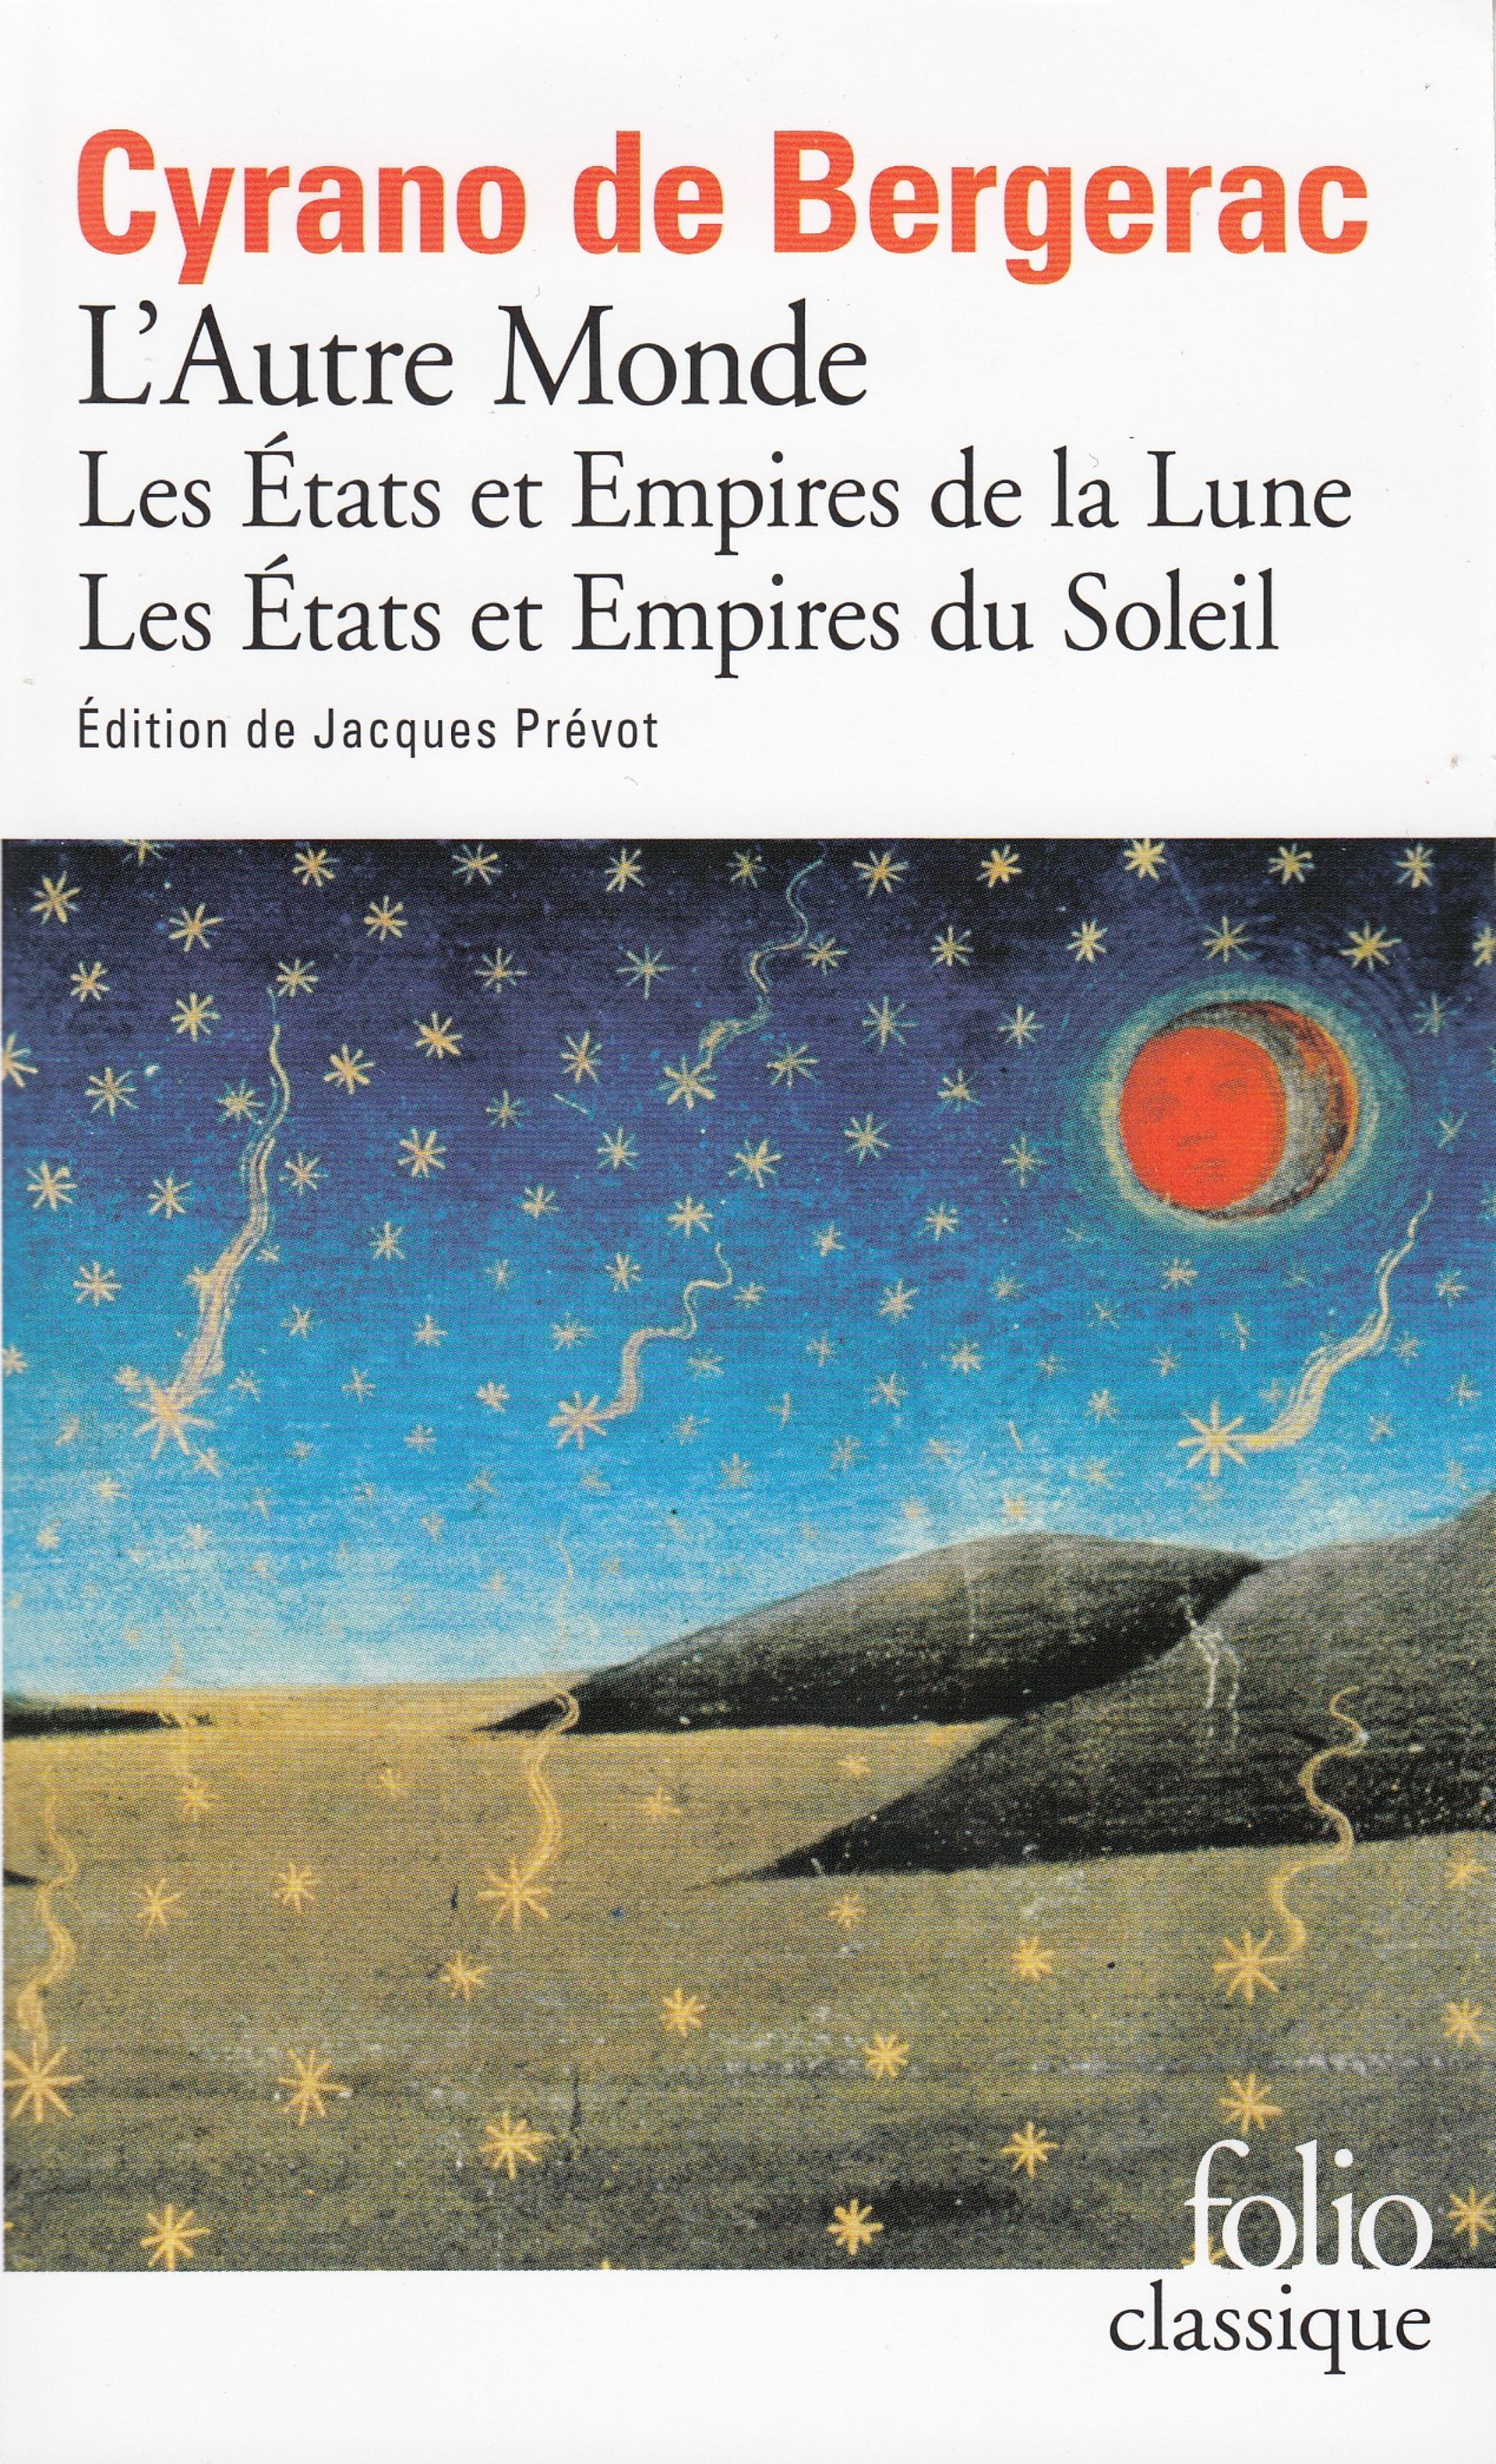 « L’Autre Monde », Savinien Cyrano de Bergerac, Gallimard/Folio, 2004.